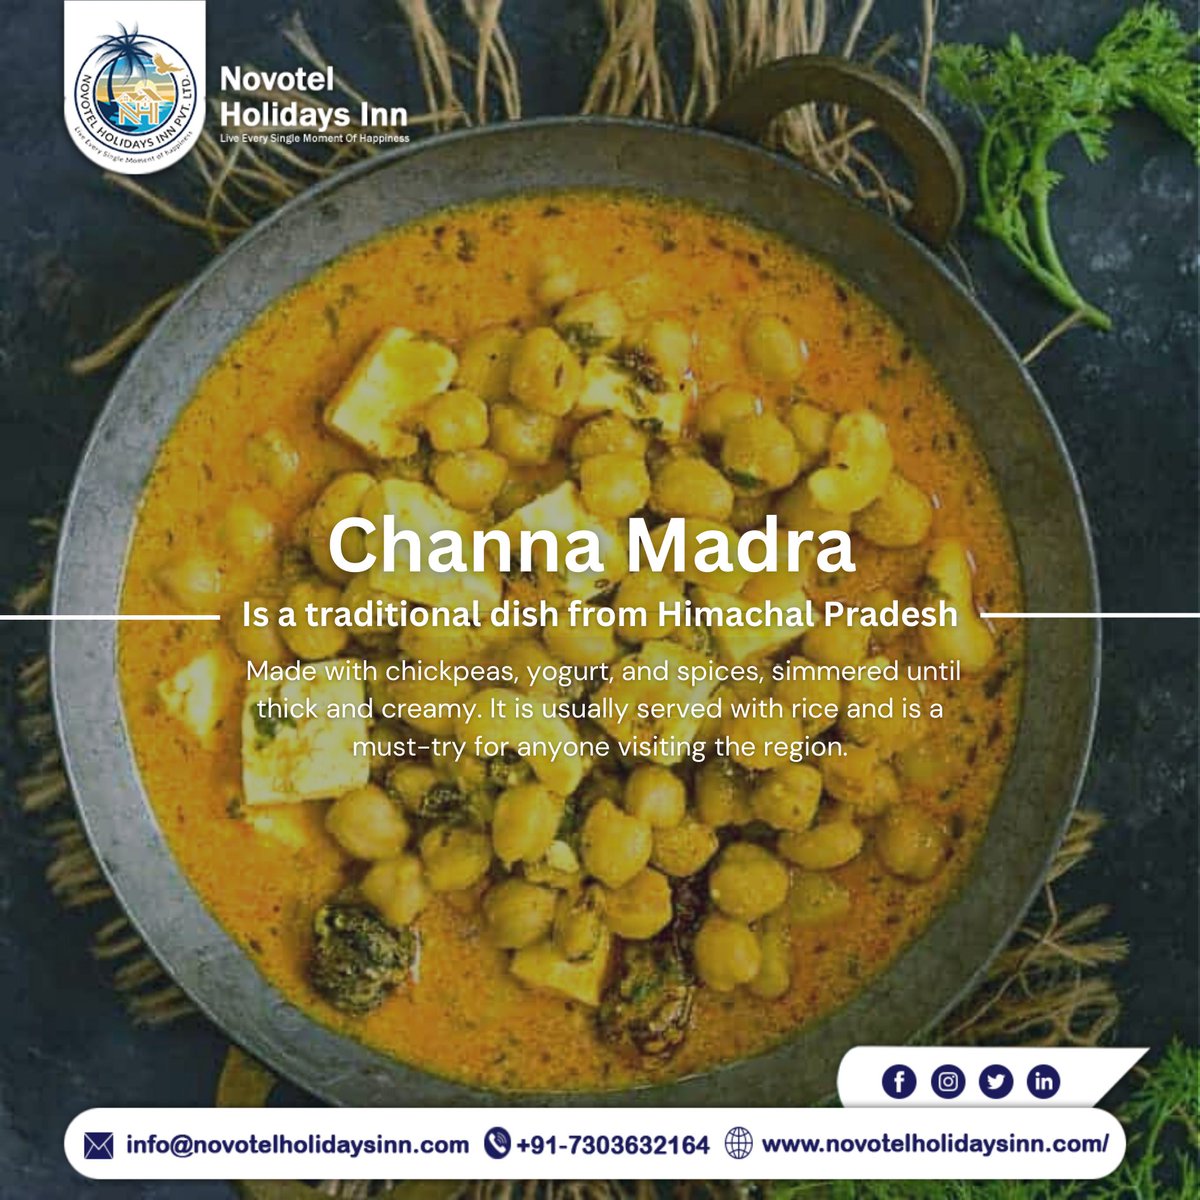 Channa Madra is a traditional dish from Himachal Pradesh made with chickpeas, 
#holiday #holidays #novotelholidaysinn #resorts #resortwear #traditionalfood #activities #shimla #ChannaMadra  #novotel #IslandRetreat #ParadiseFound #manali